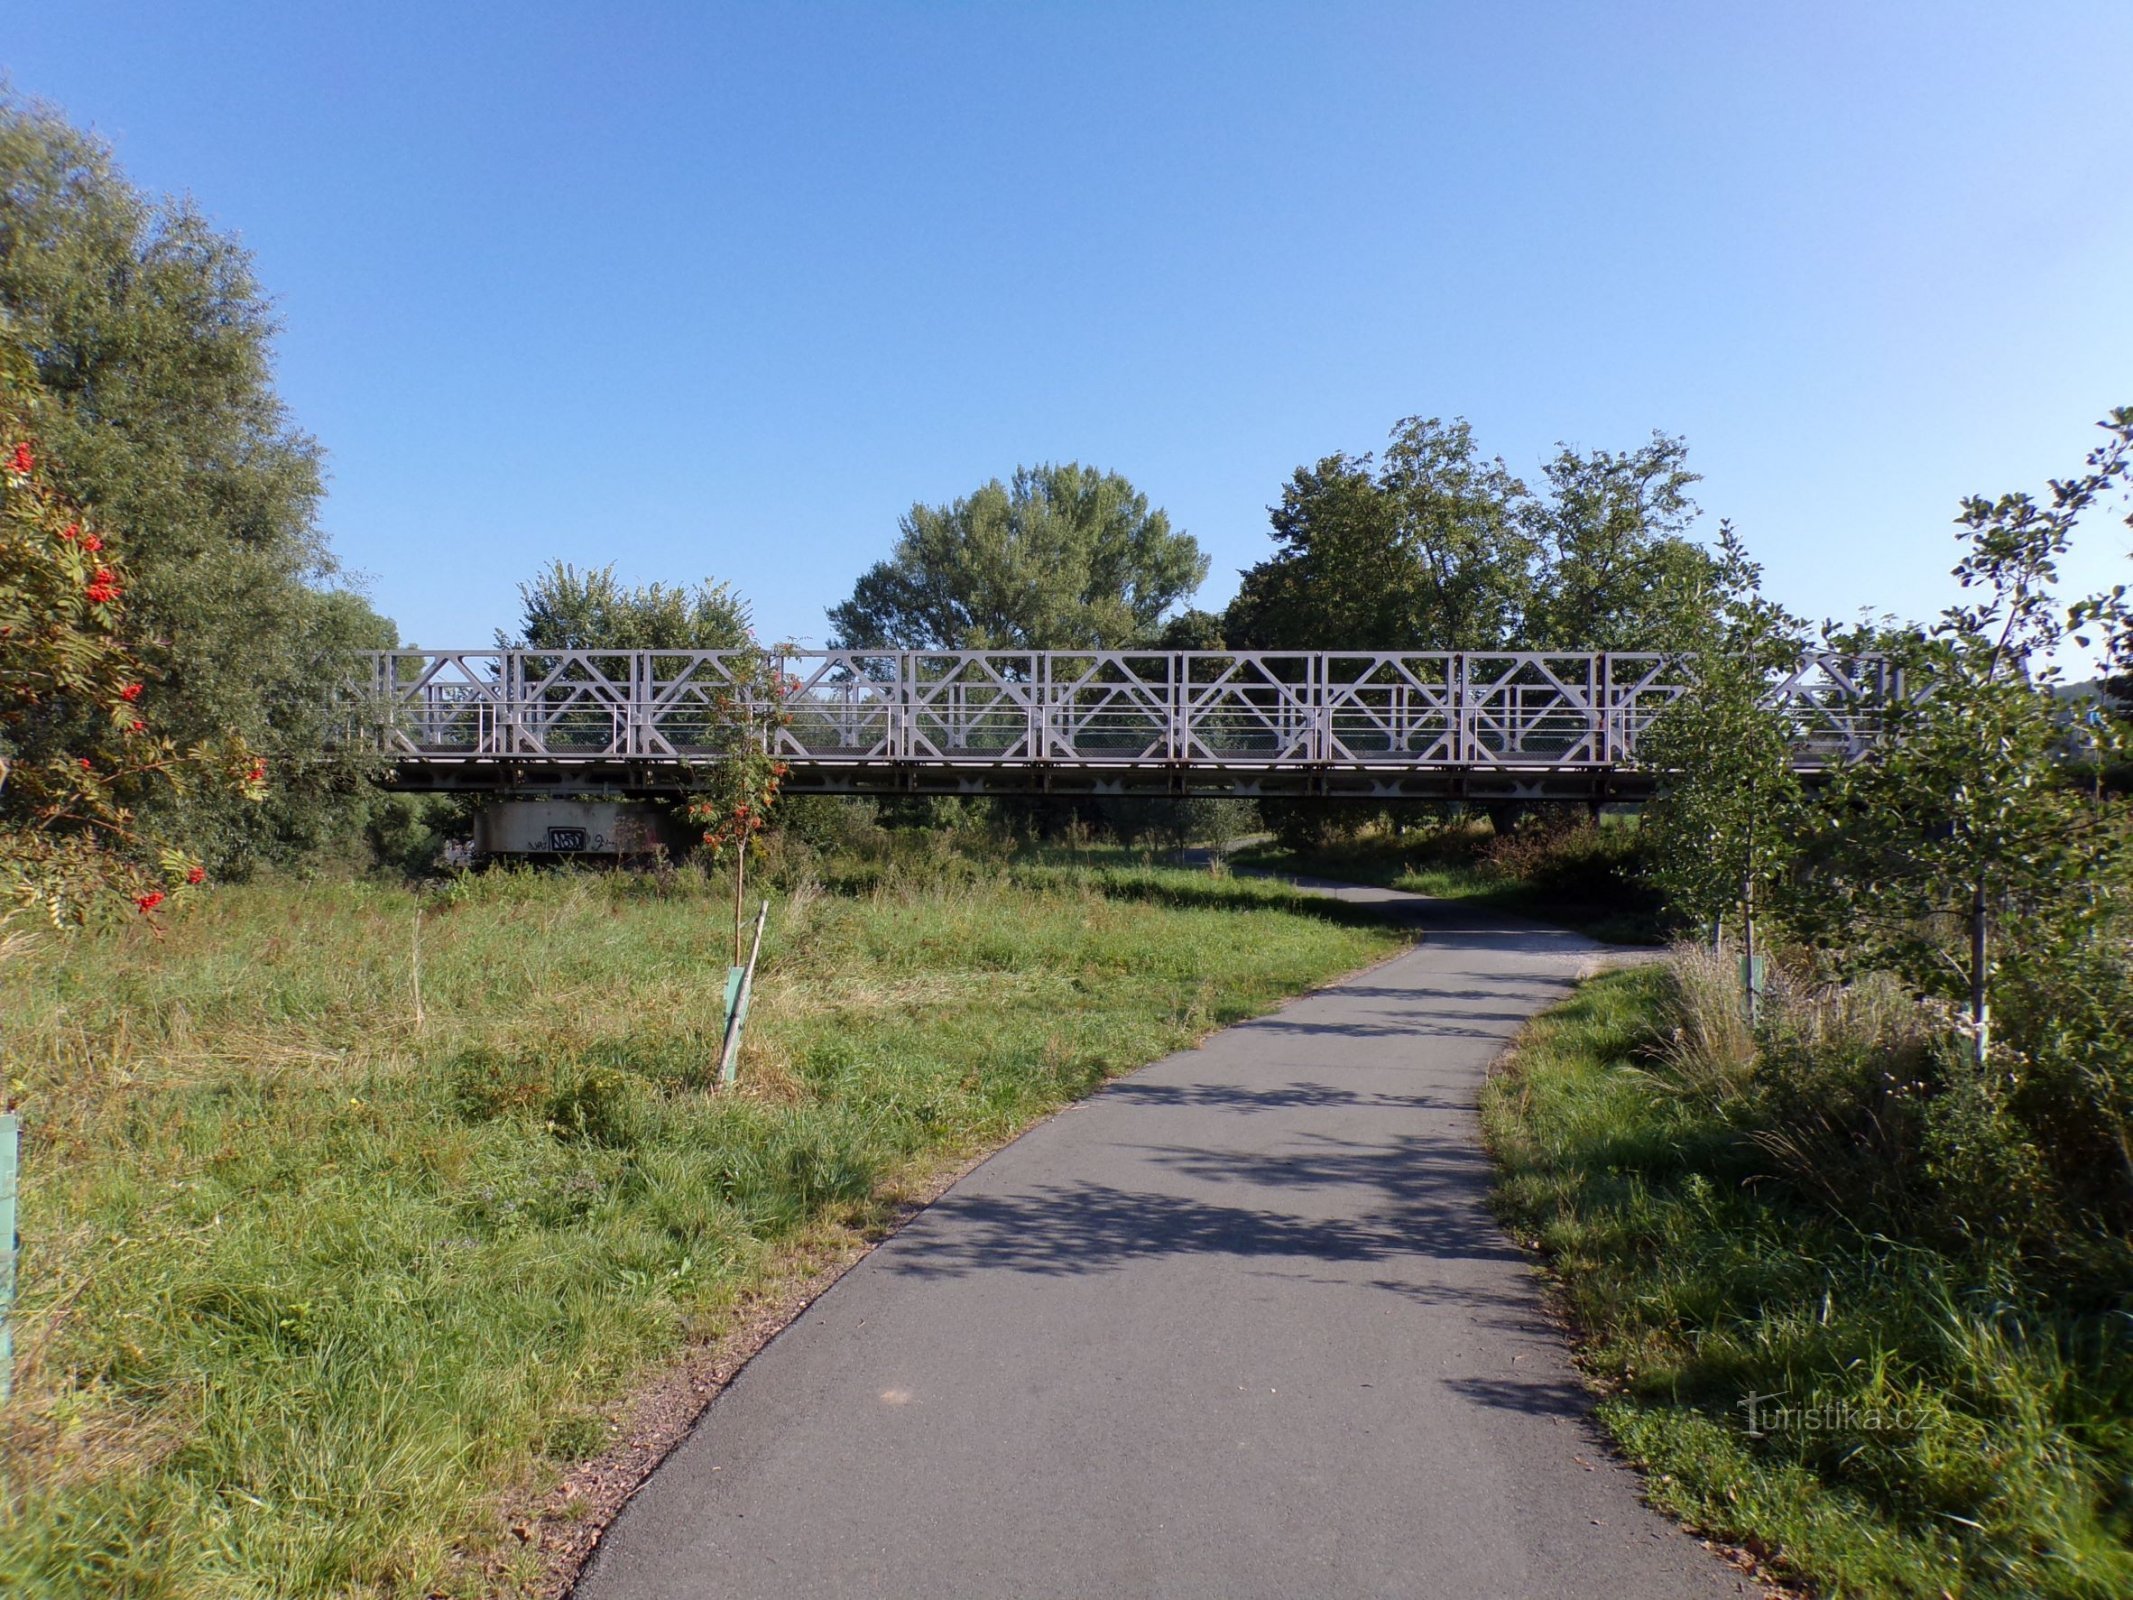 Cầu Sắt bắc qua sông Elbe (Vysoká nad Labem/Opatovice nad Labem, 3.9.2021/XNUMX/XNUMX)